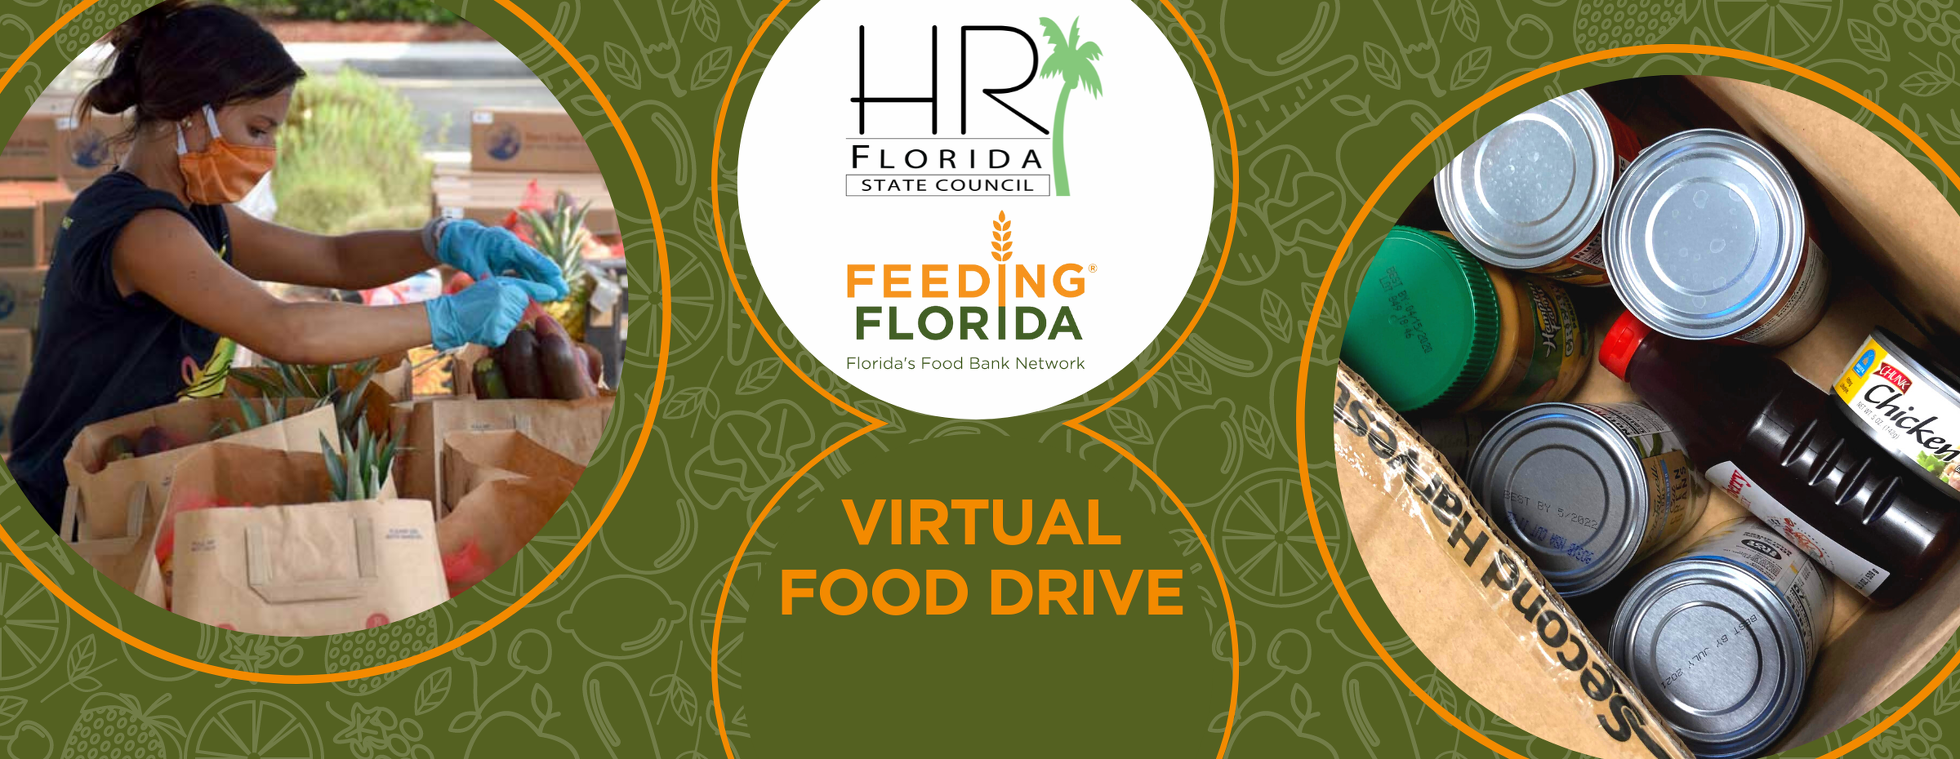 HR Florida Virtual Food Drive for Feeding Florida 